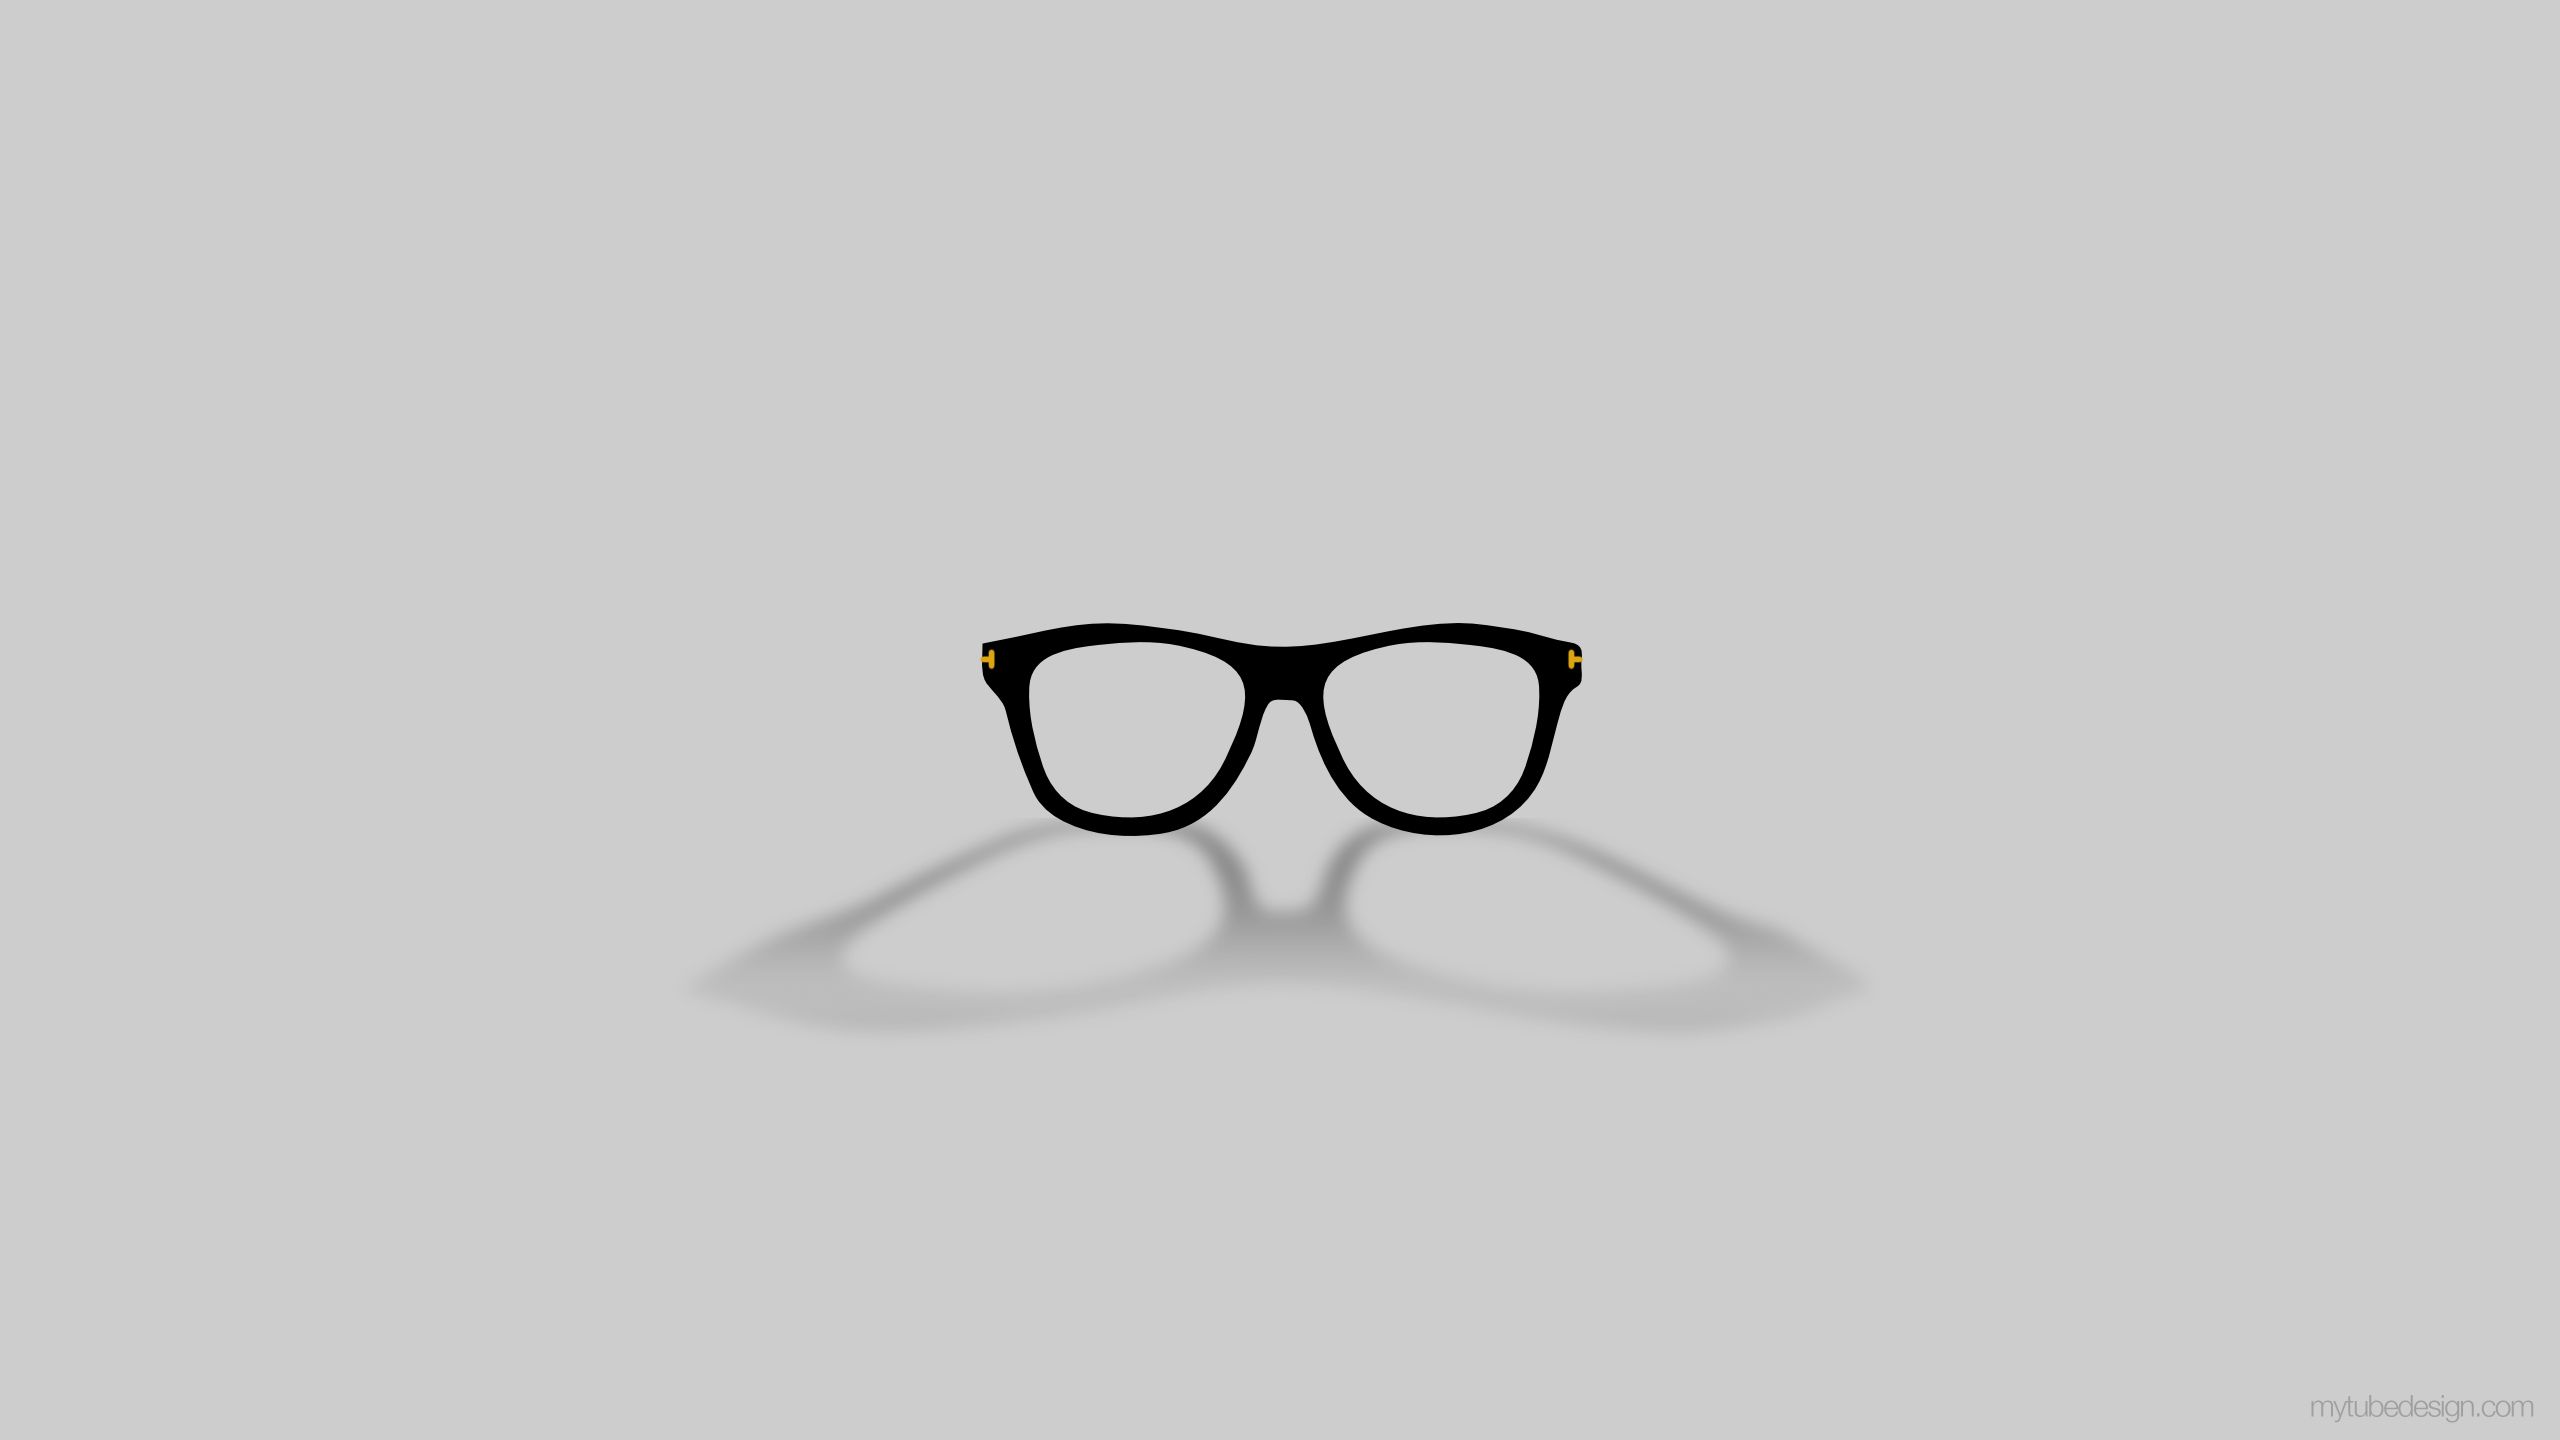 Tom Ford Glasses MyTubeDesign Wallpapers YouTube Facebook